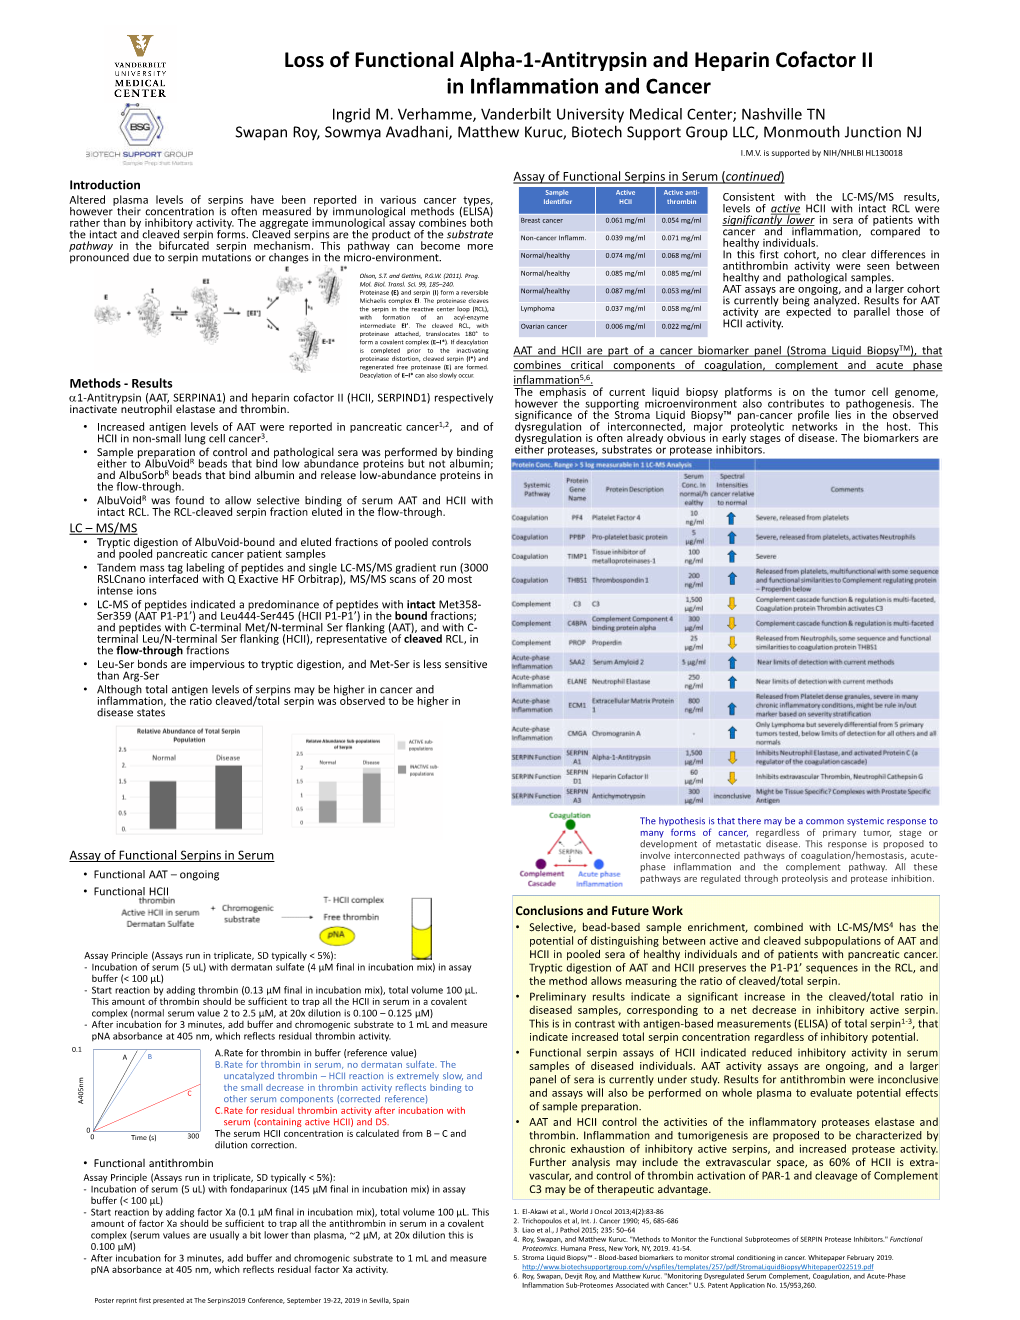 Loss of Functional Alpha-1-Antitrypsin and Heparin Cofactor II in Inflammation and Cancer Ingrid M